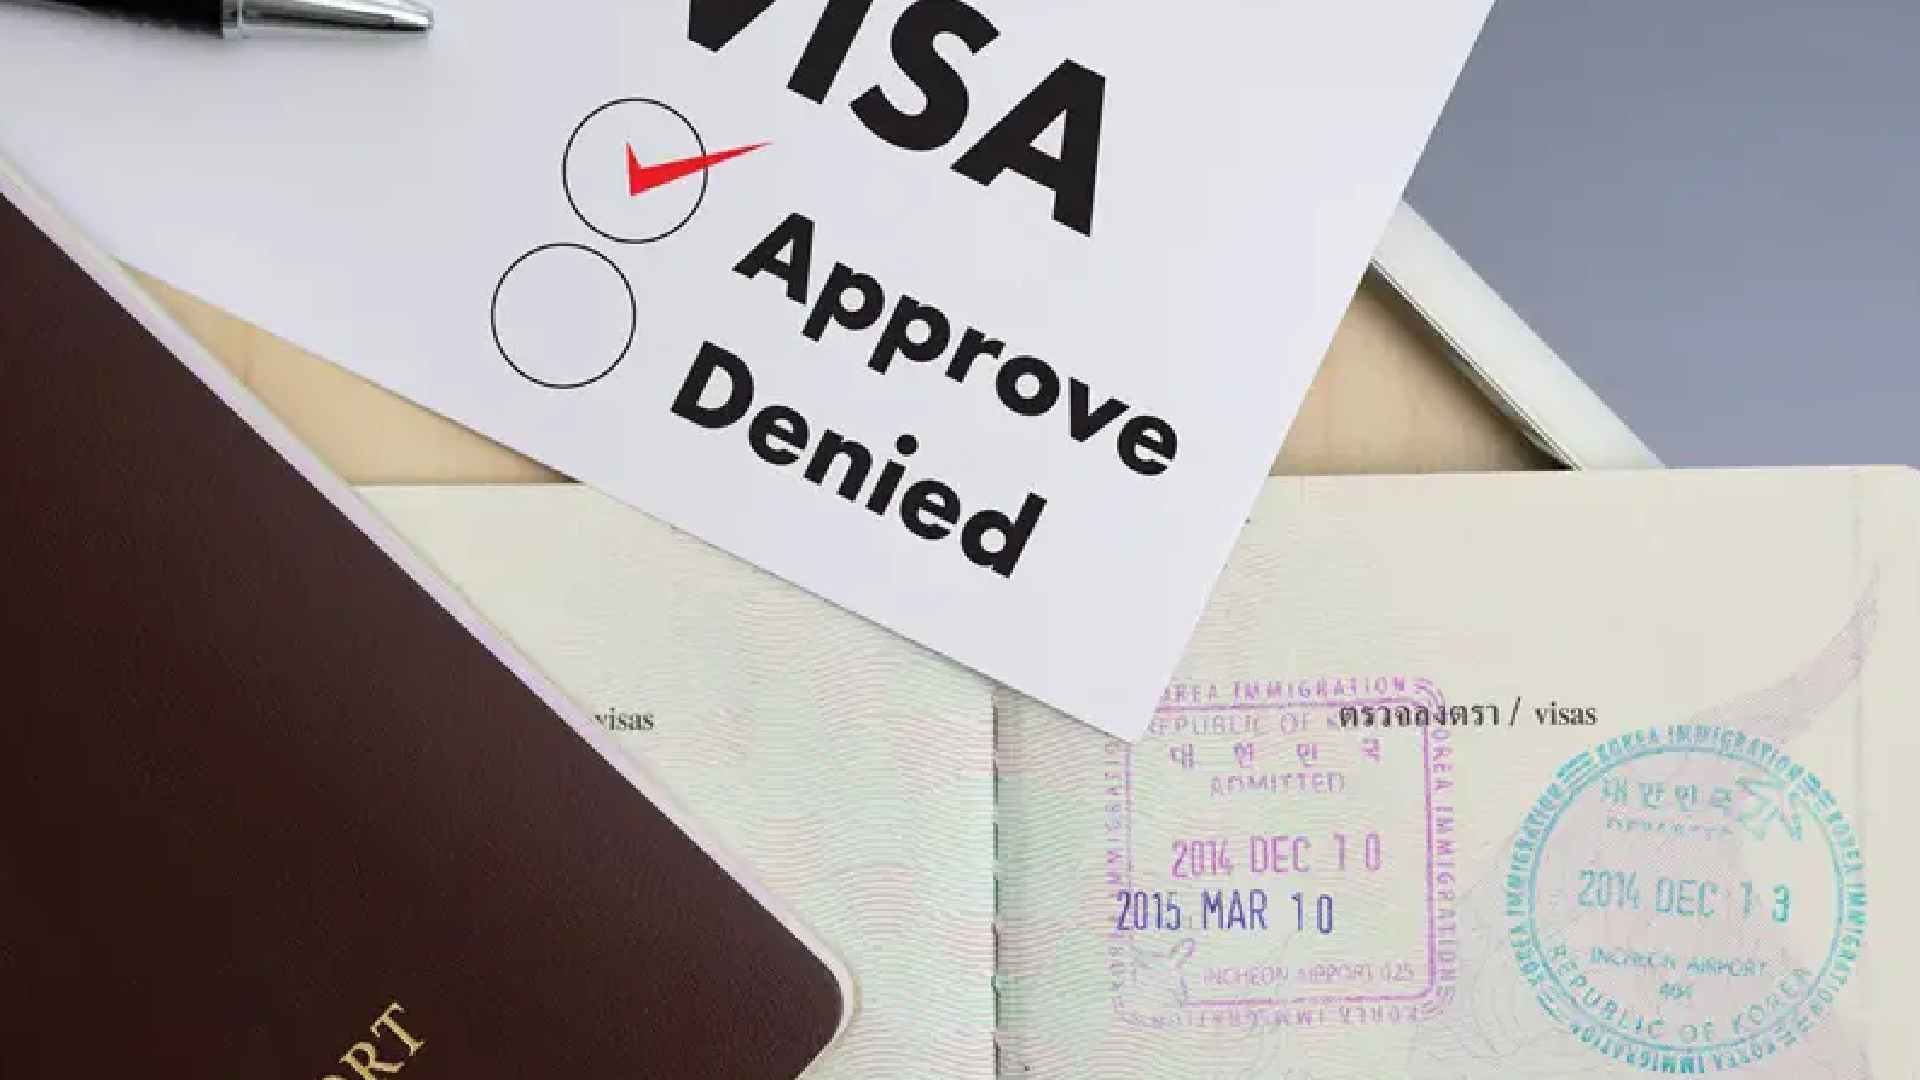 Kuwait on arrival visa for UAE residents 